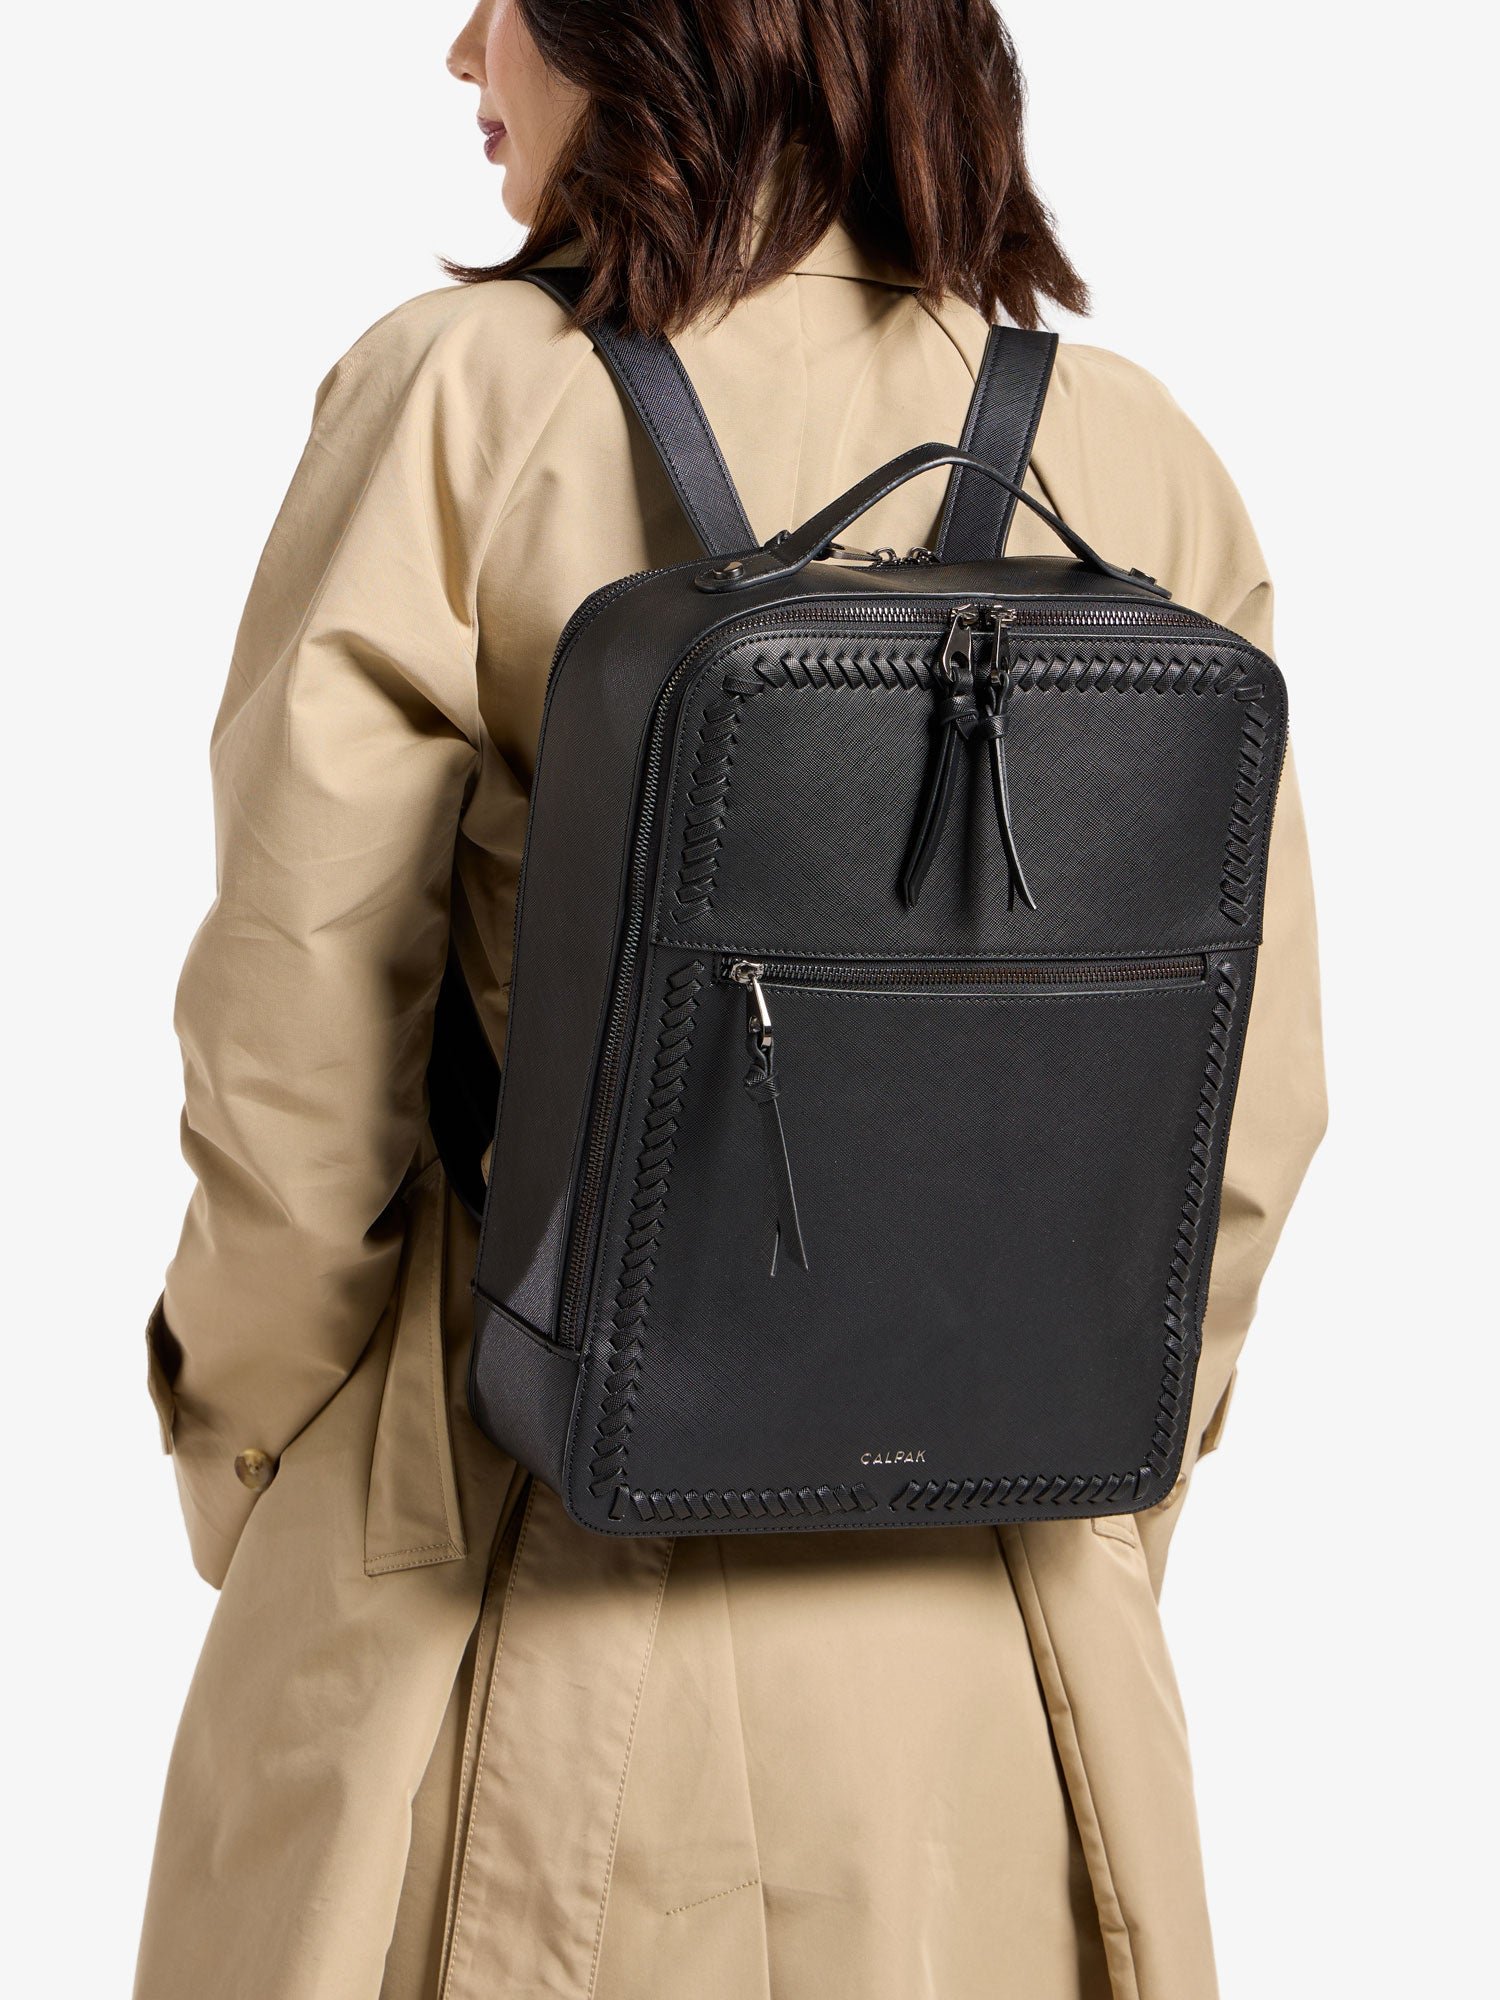 Model wearing gunmetal black CALPAK laptop backpack for 17 inch laptop